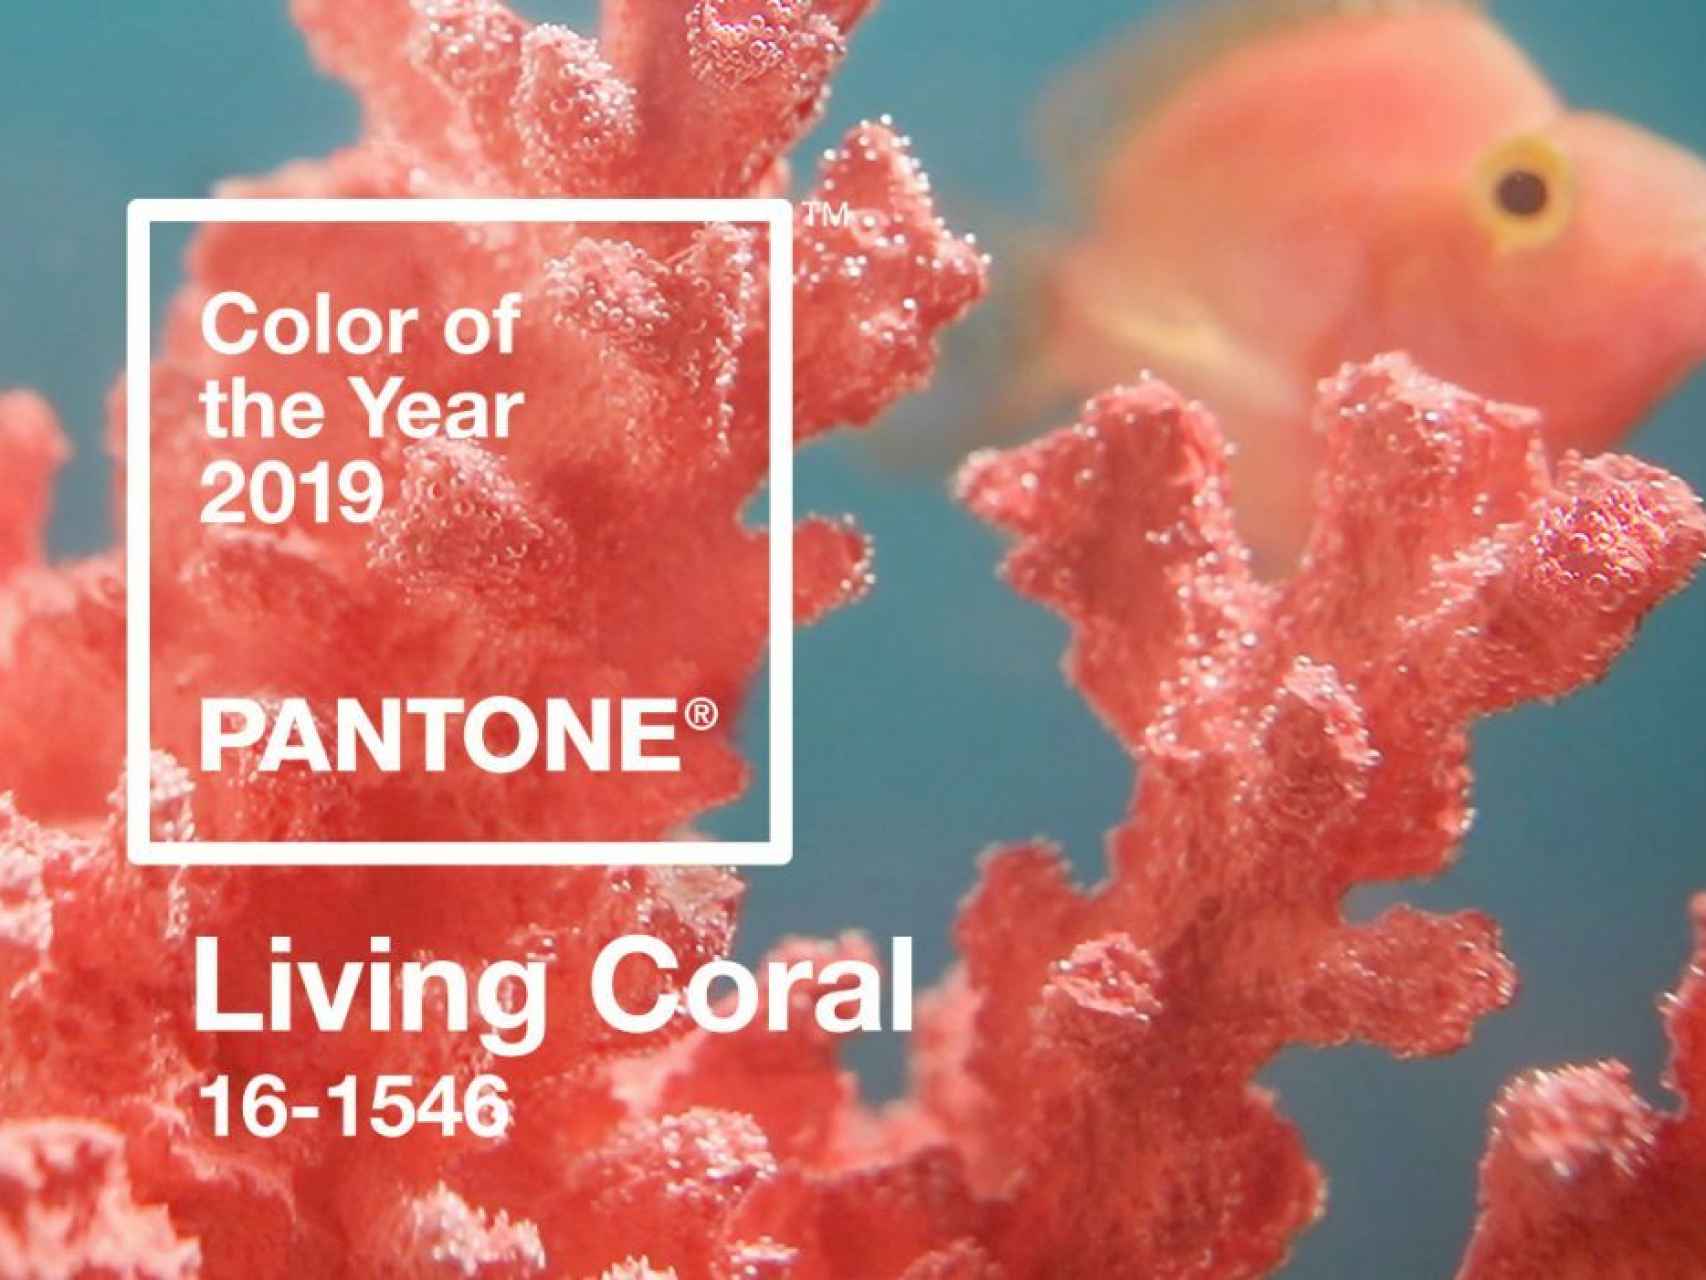 Color of the Year 2019, según Pantone.